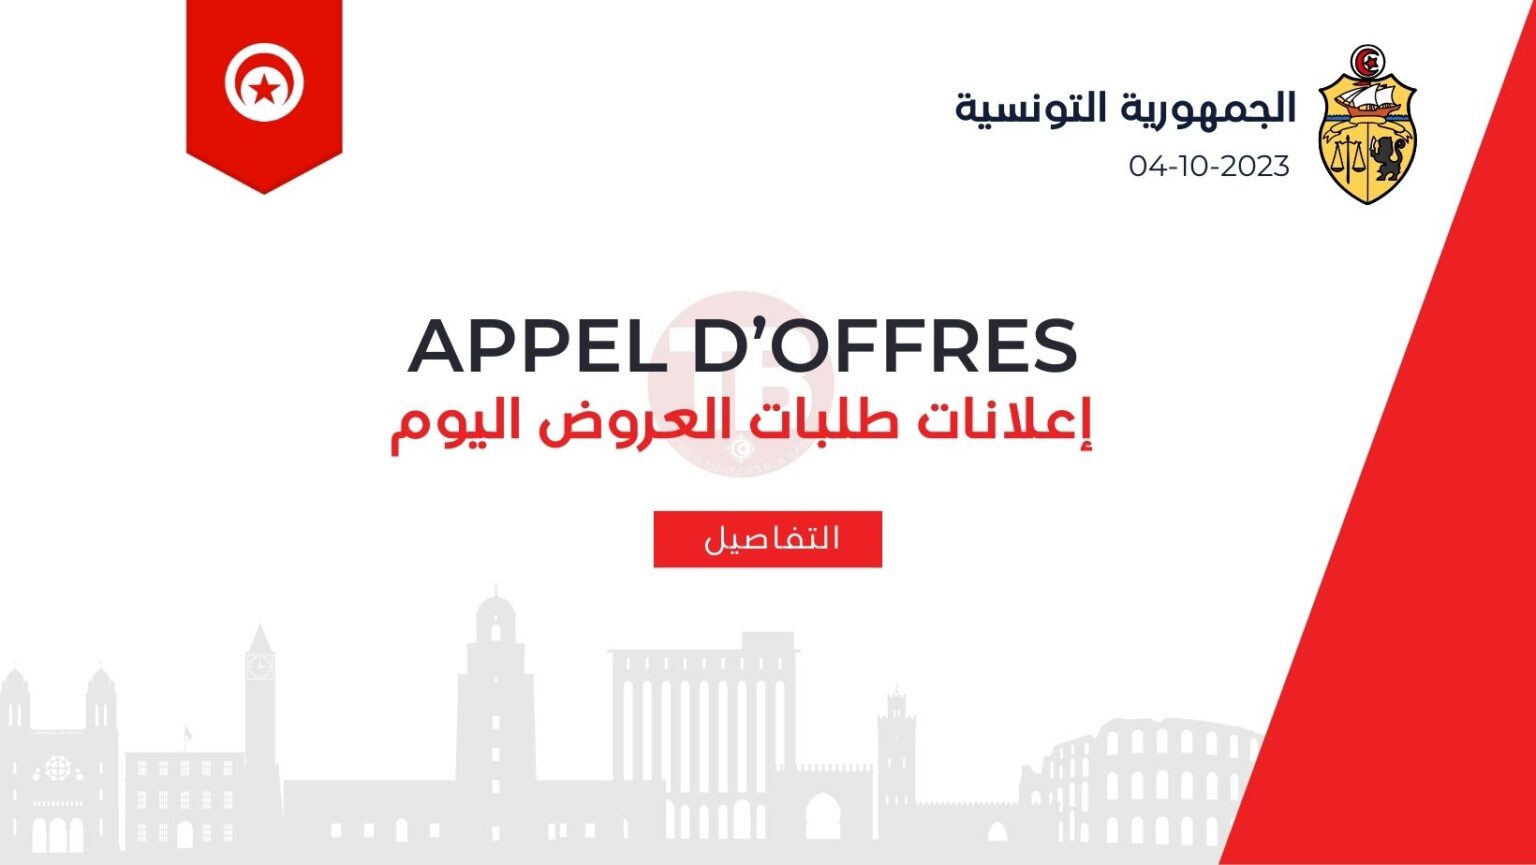 appel-doffre-tunisie-04-10-2023